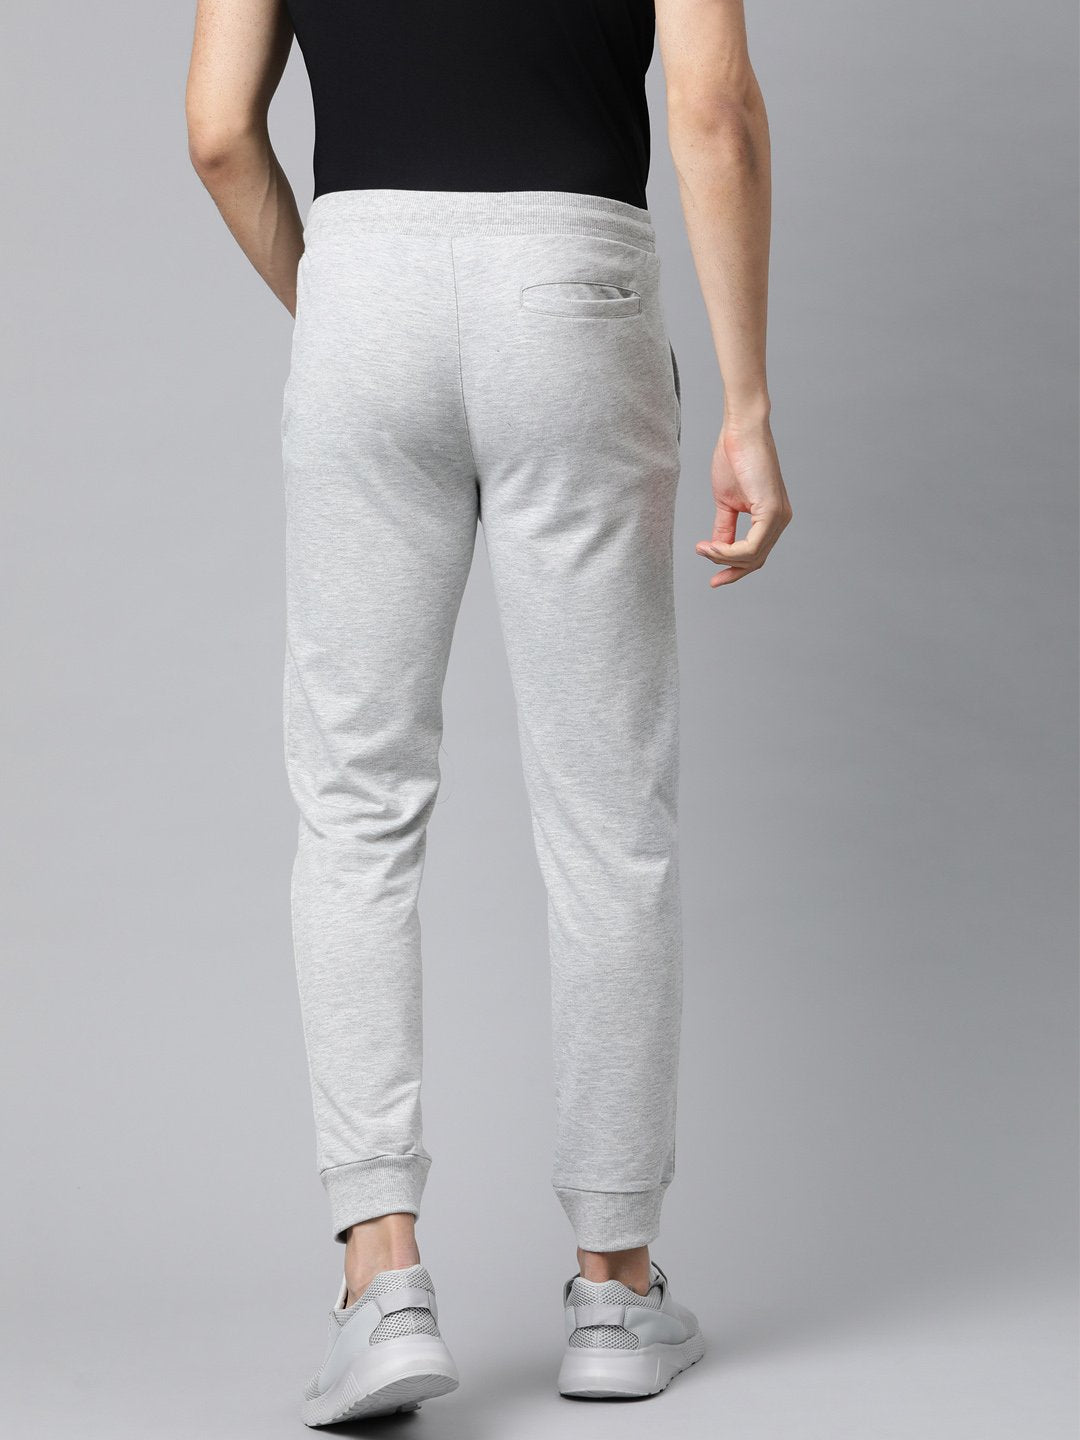 TBMPOY Men's 2 Piece Jacket & Pants Woven Warm Jogging Gym Activewear Grey L